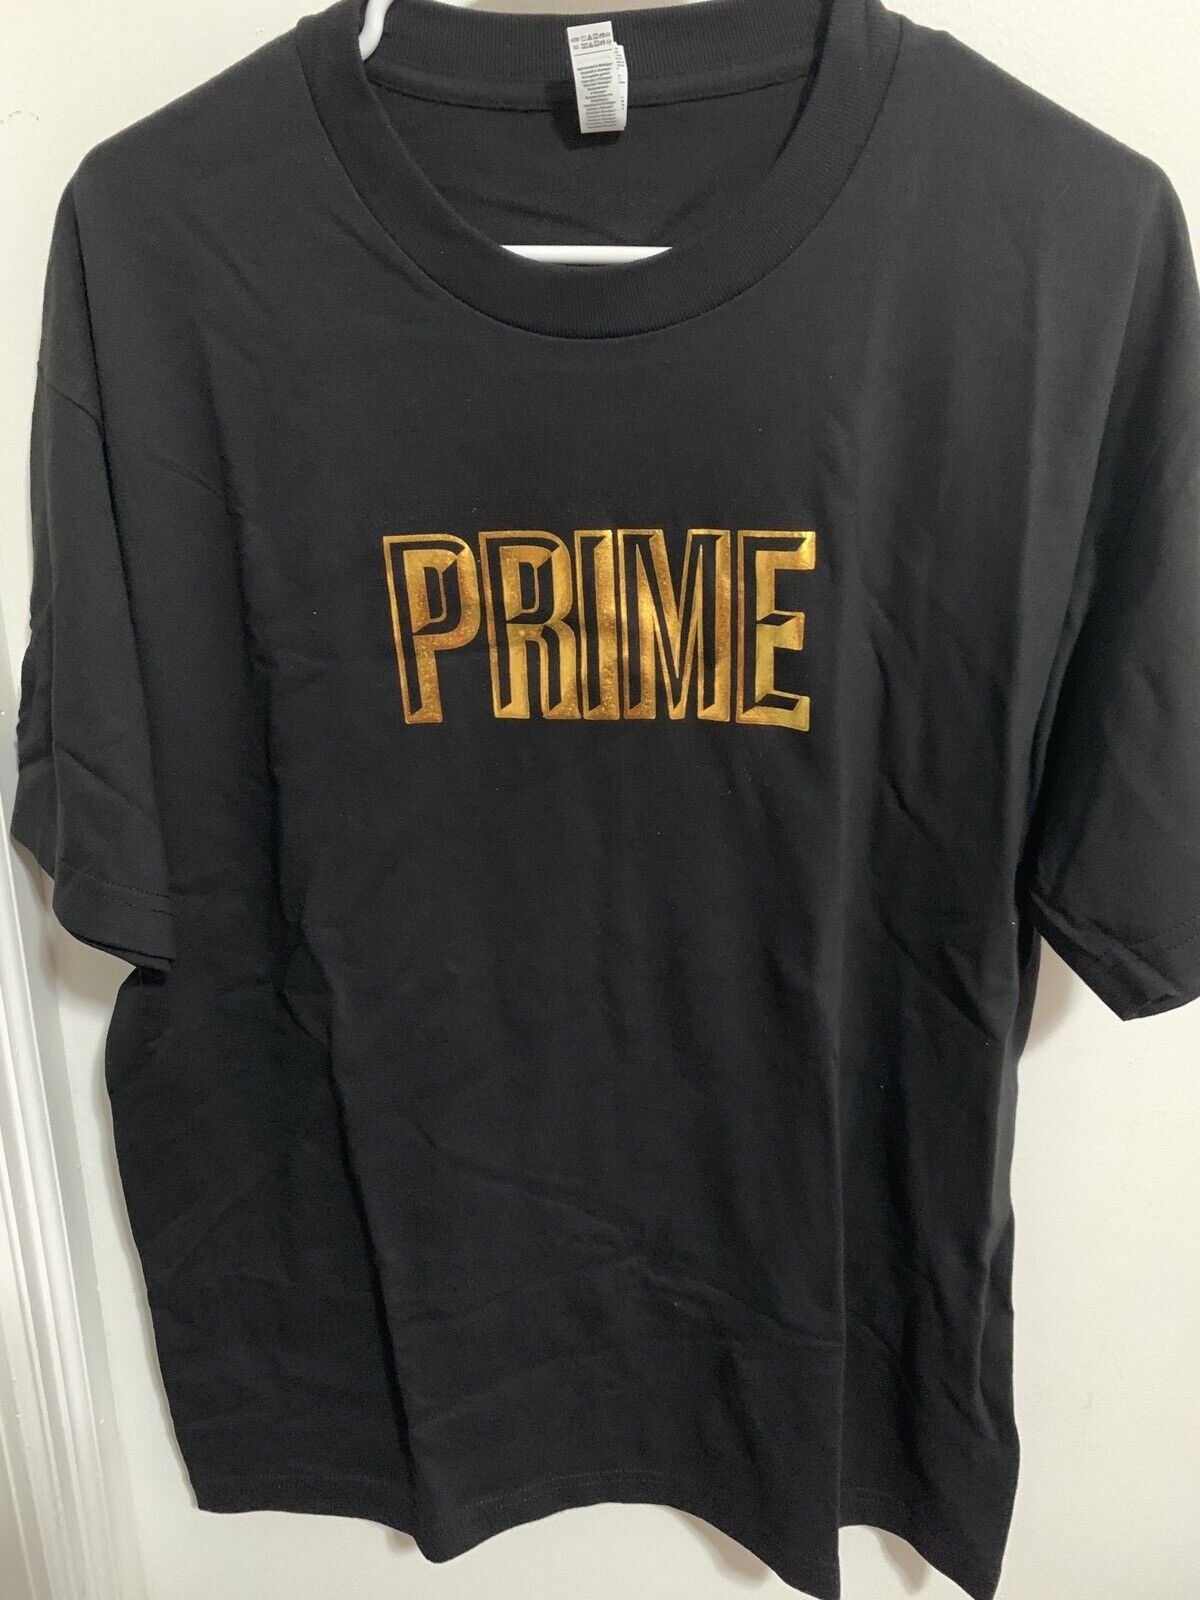 Prime NYC Limited Edition 1 Billion Gold Rare Event Tshirt (L)